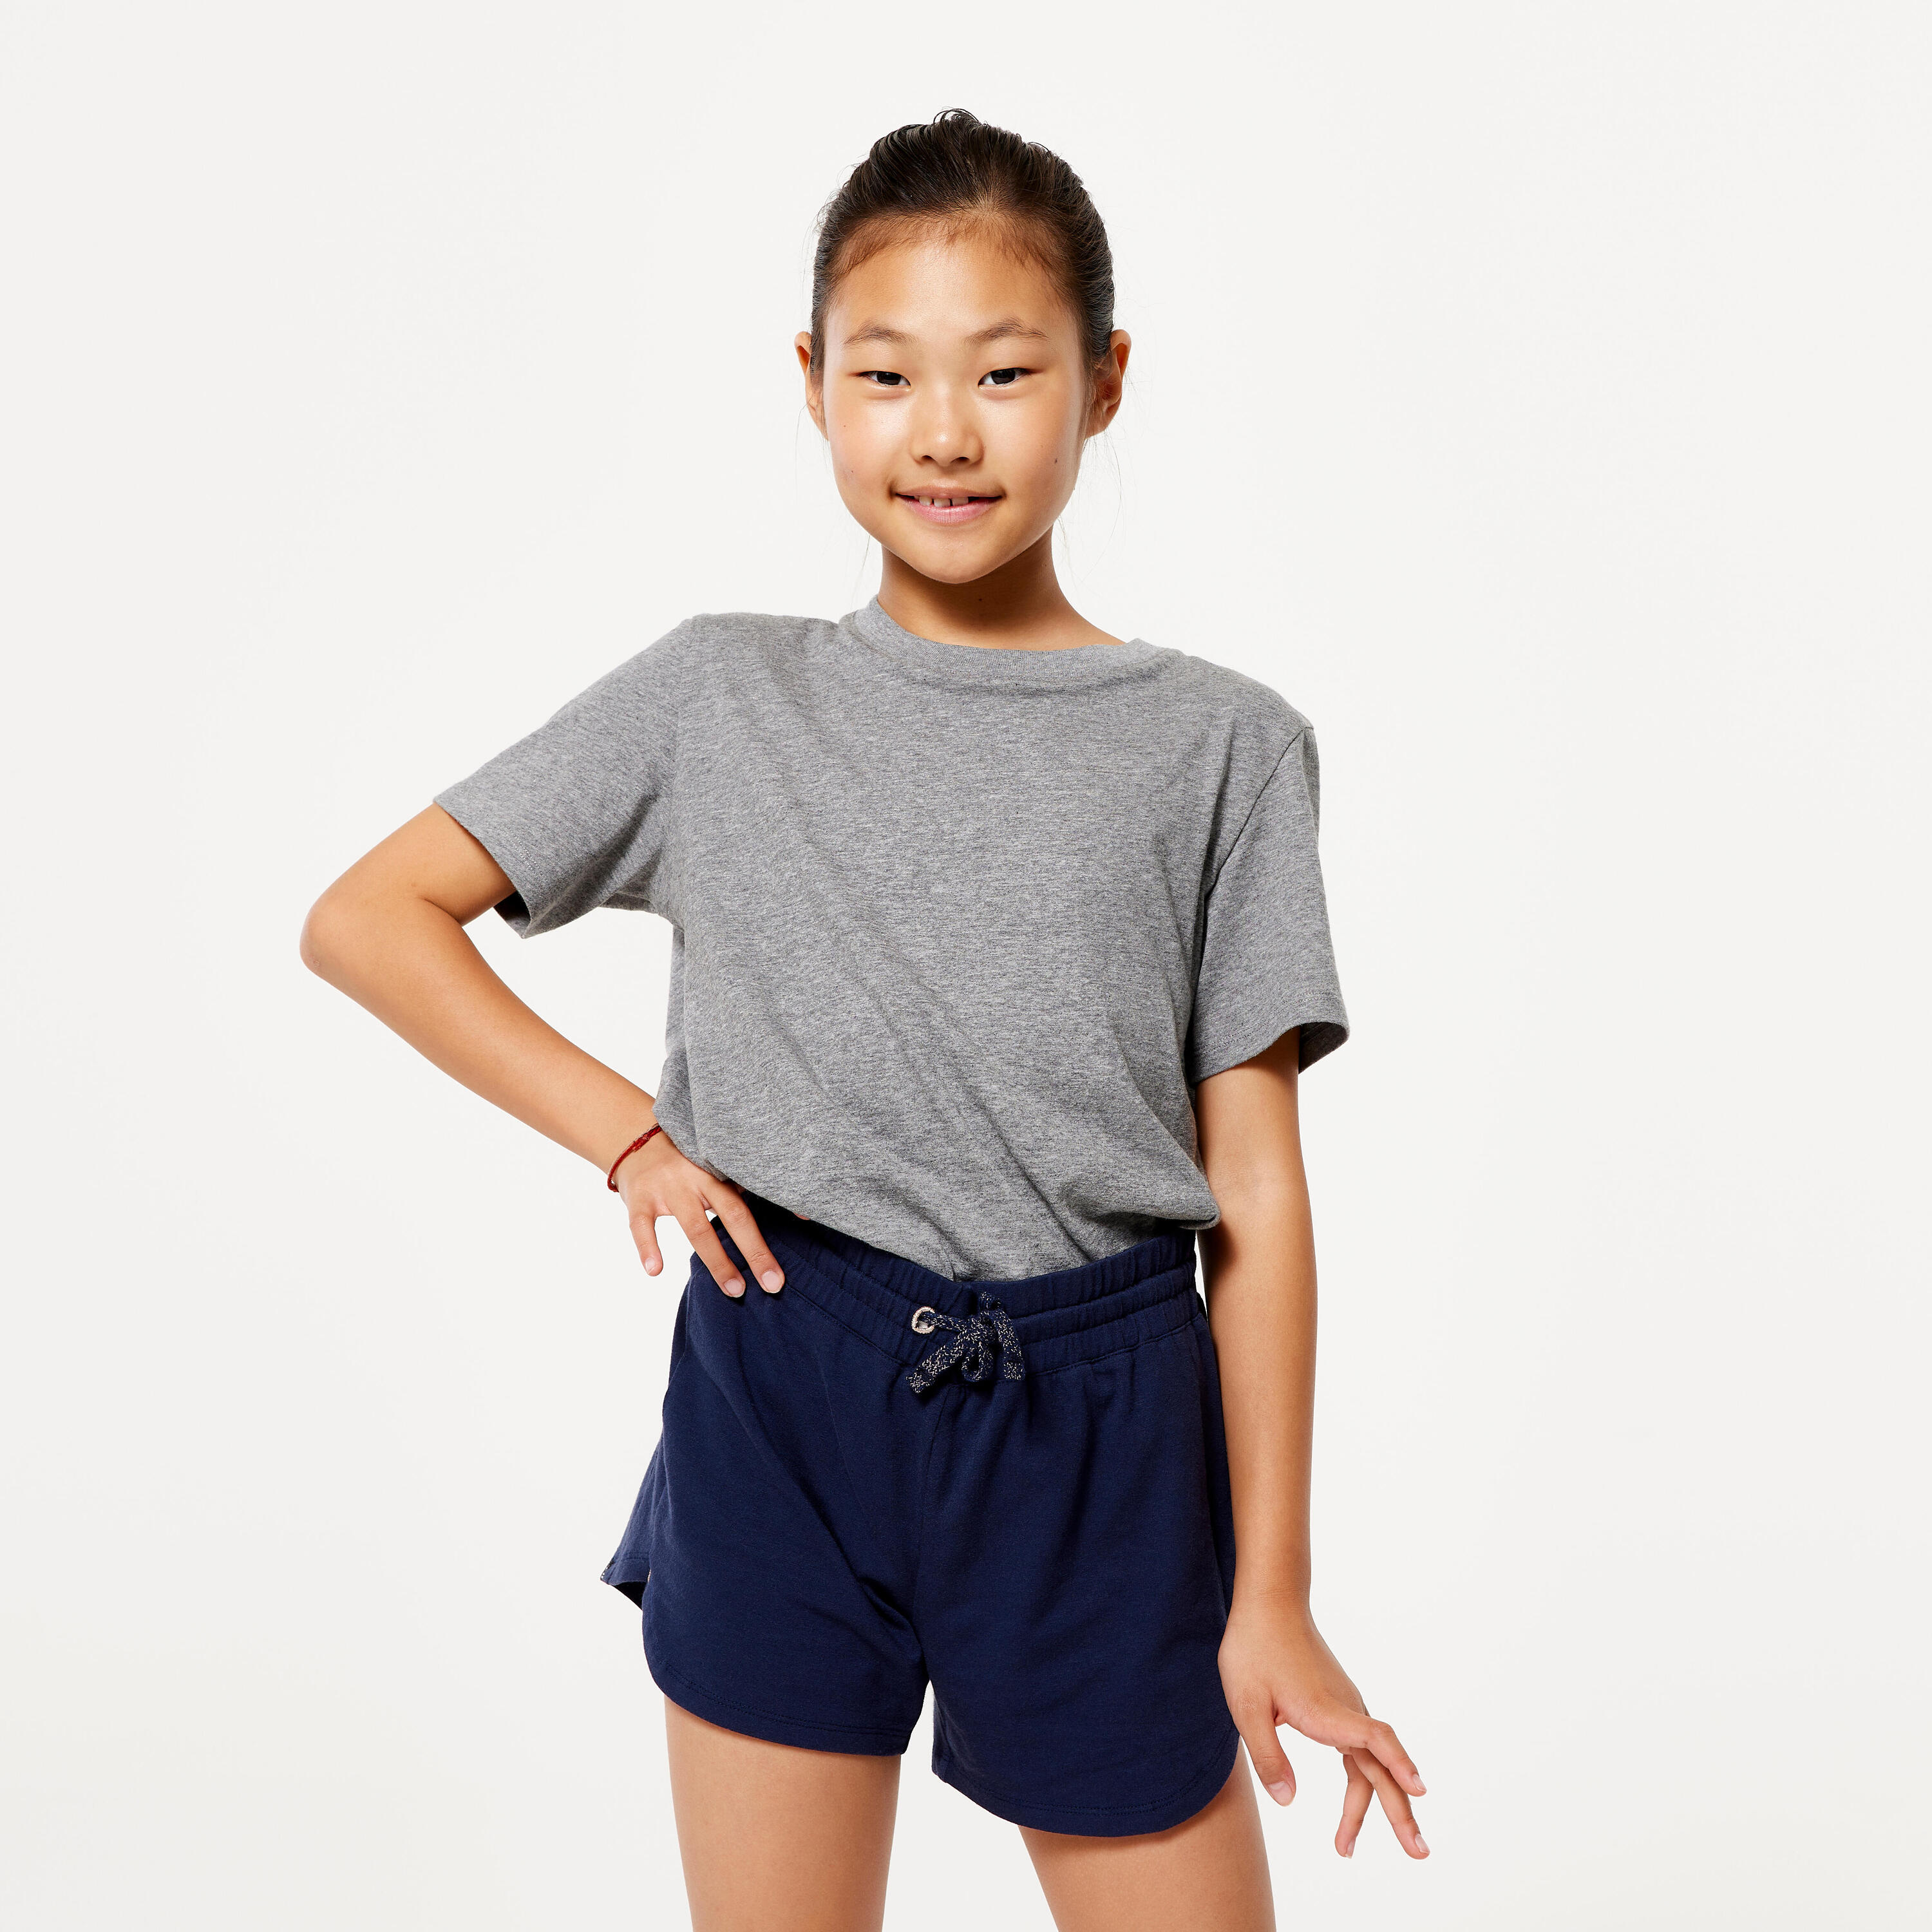 Kids' Unisex Cotton T-Shirt - Grey 5/6